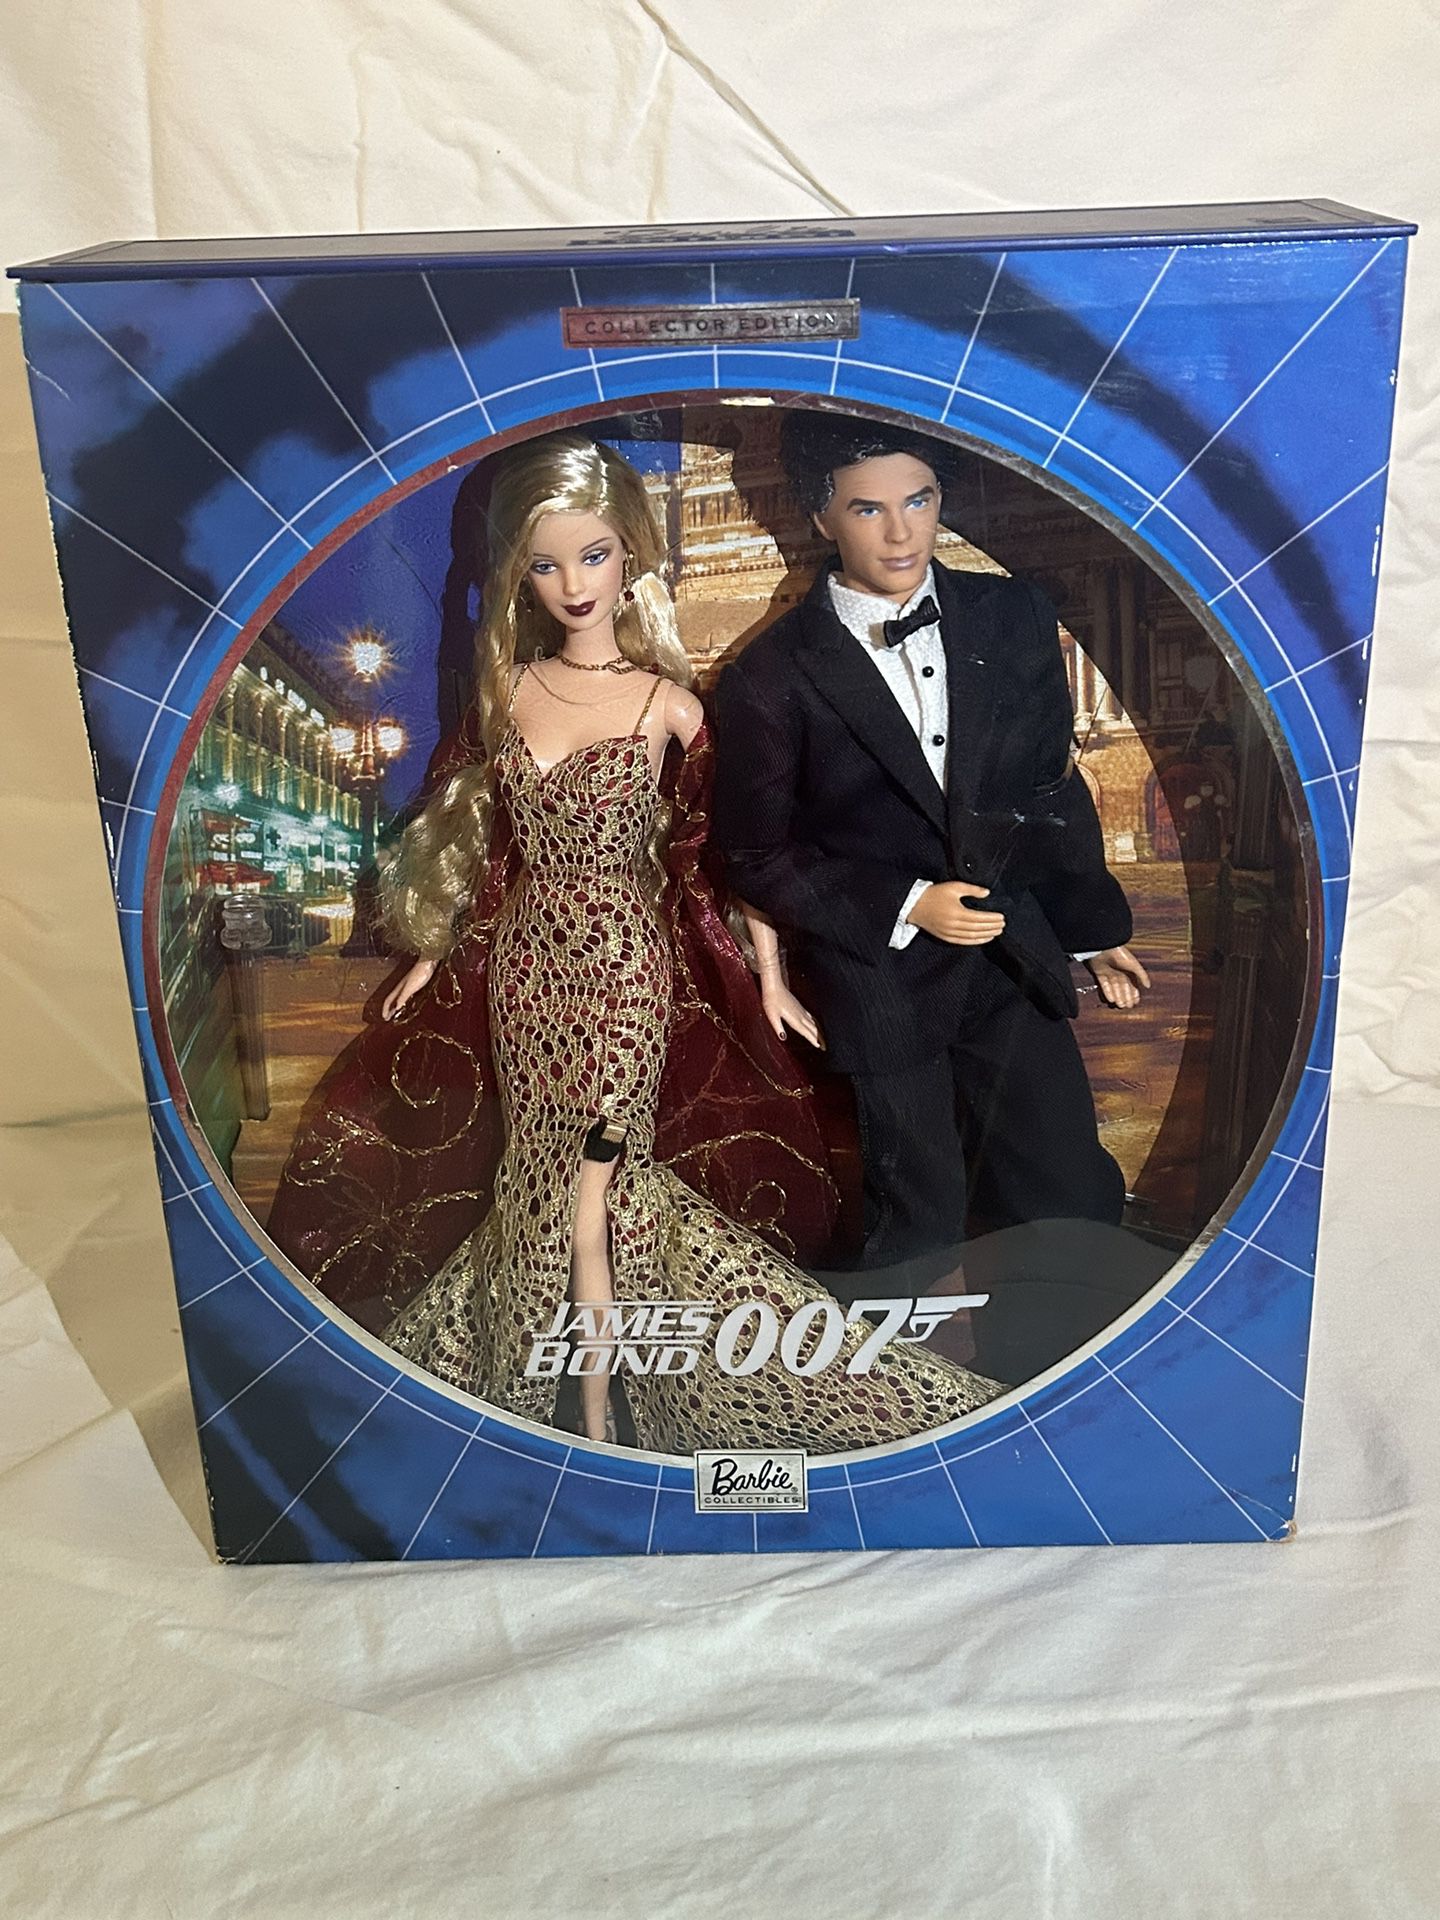 James’s Bond 007 Ken and Barbie Dolls Giftset Mattel B0150 NEW in Box